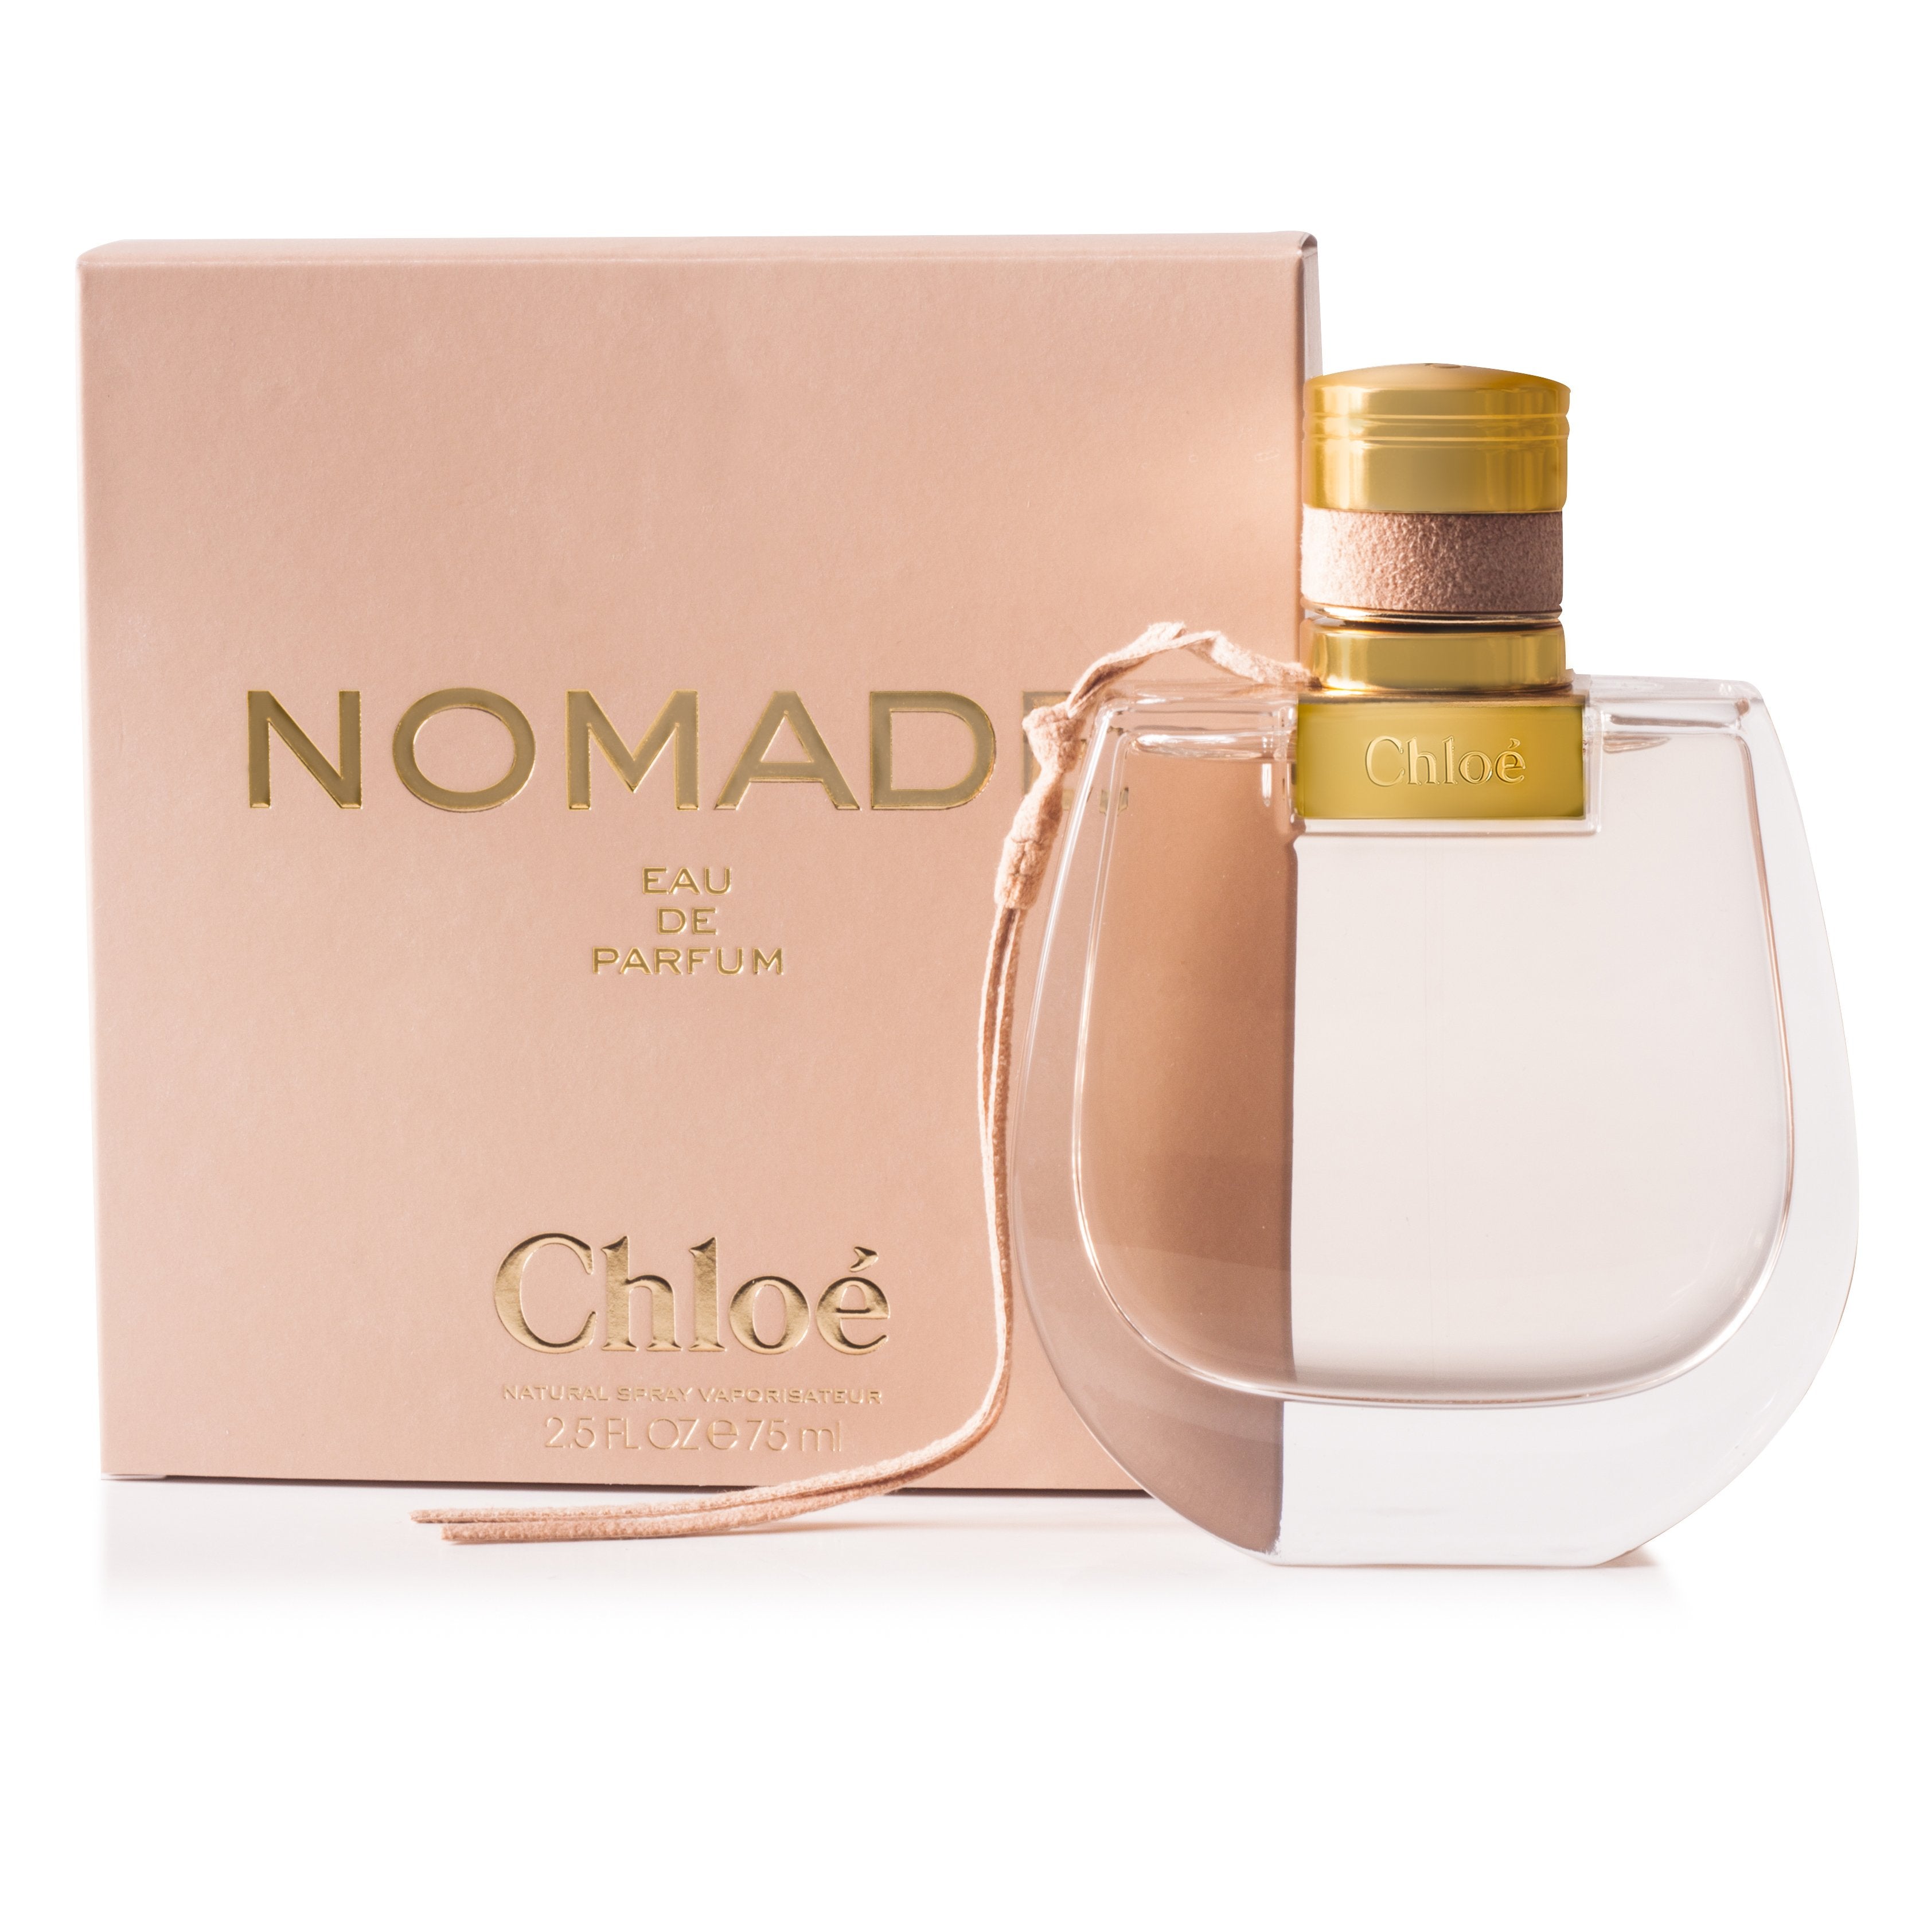 Parfum Women Eau Market Chloe – Nomade for de Spray Fragrance by